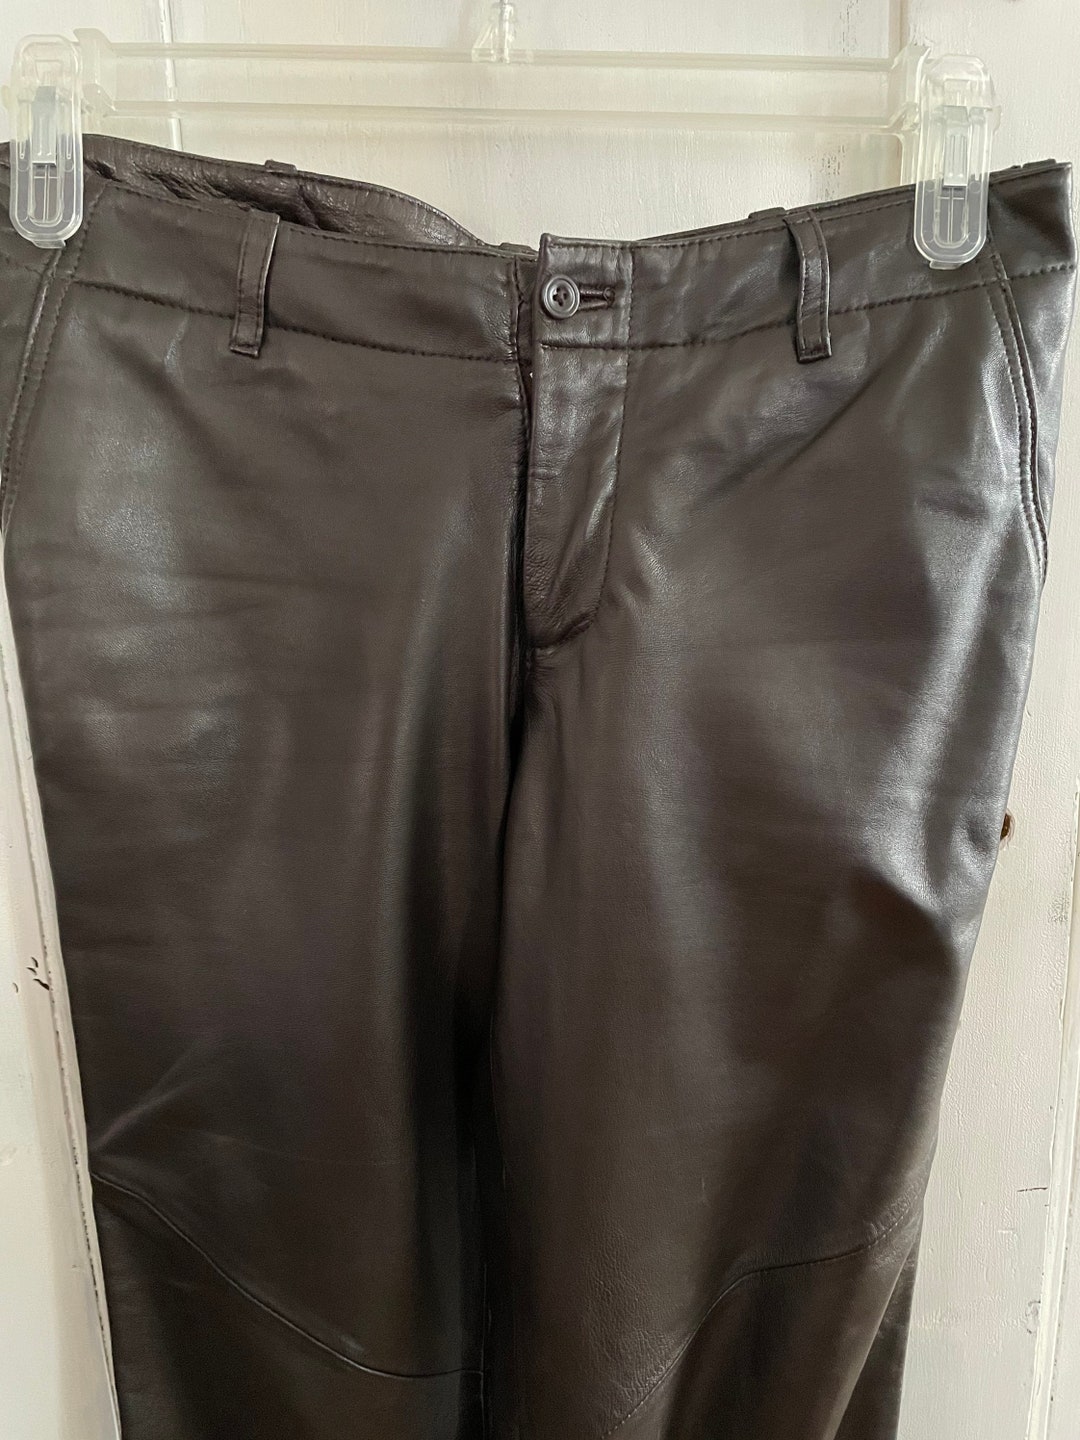 Vintage Leather Pants Gap - Etsy